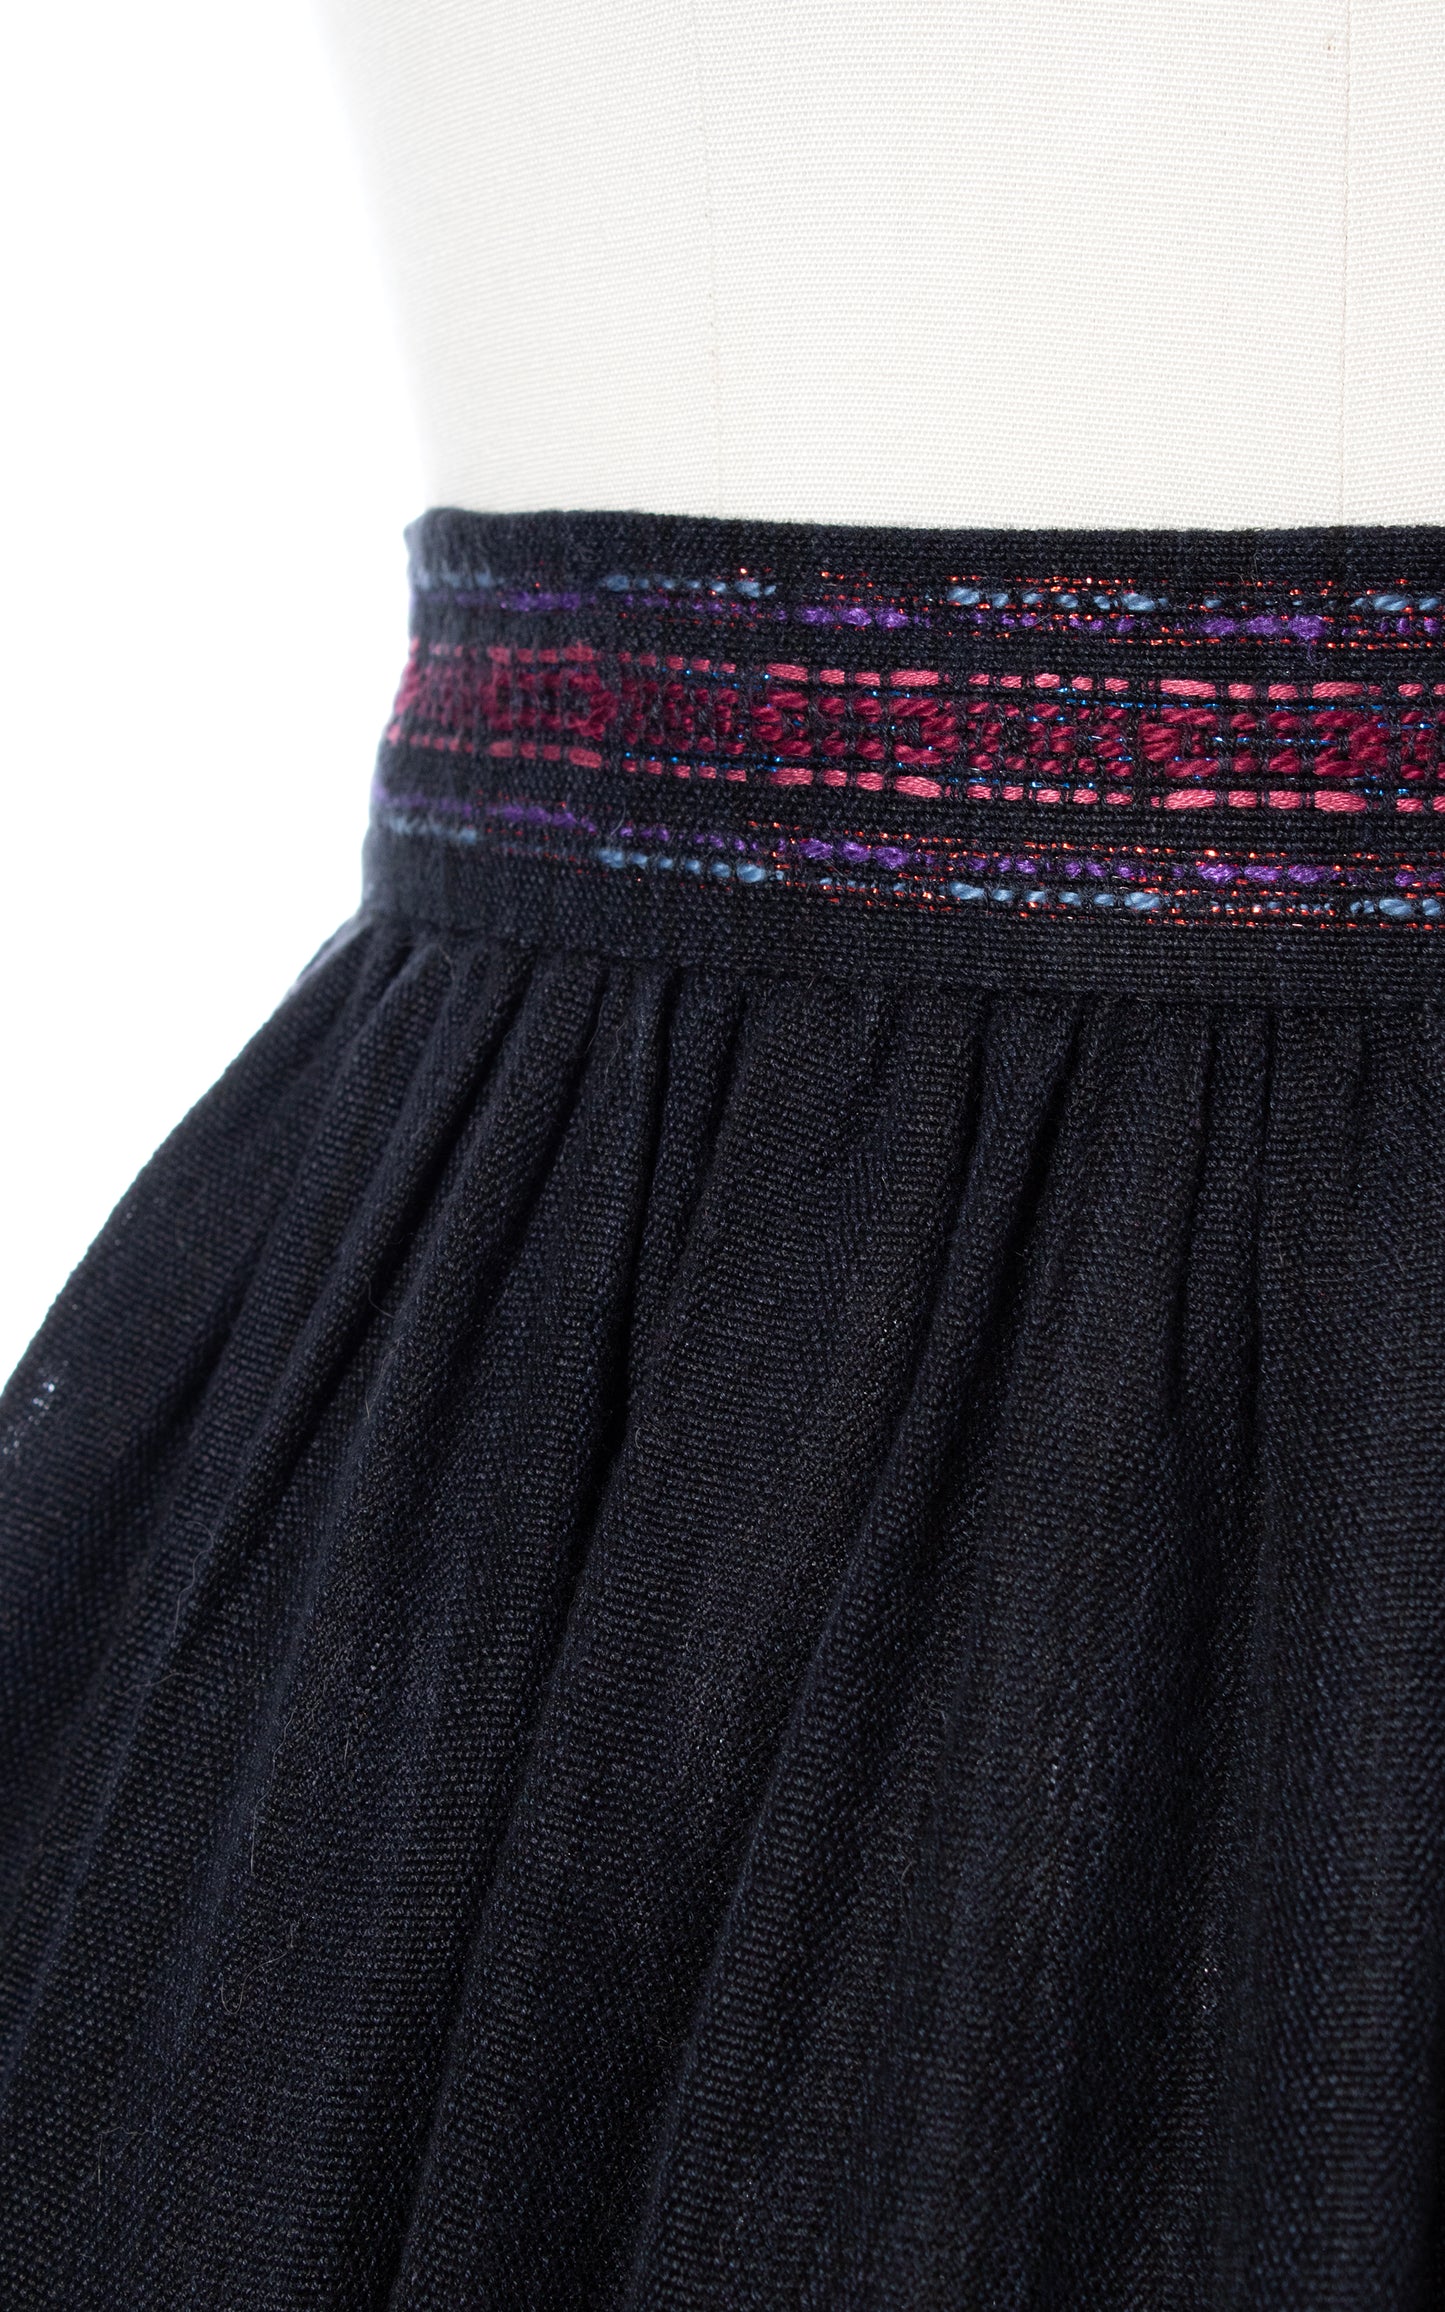 Vintage 60s 1960s Hand-Woven Striped Cotton Black Pink Border Skirt BirthdayLifeVintage